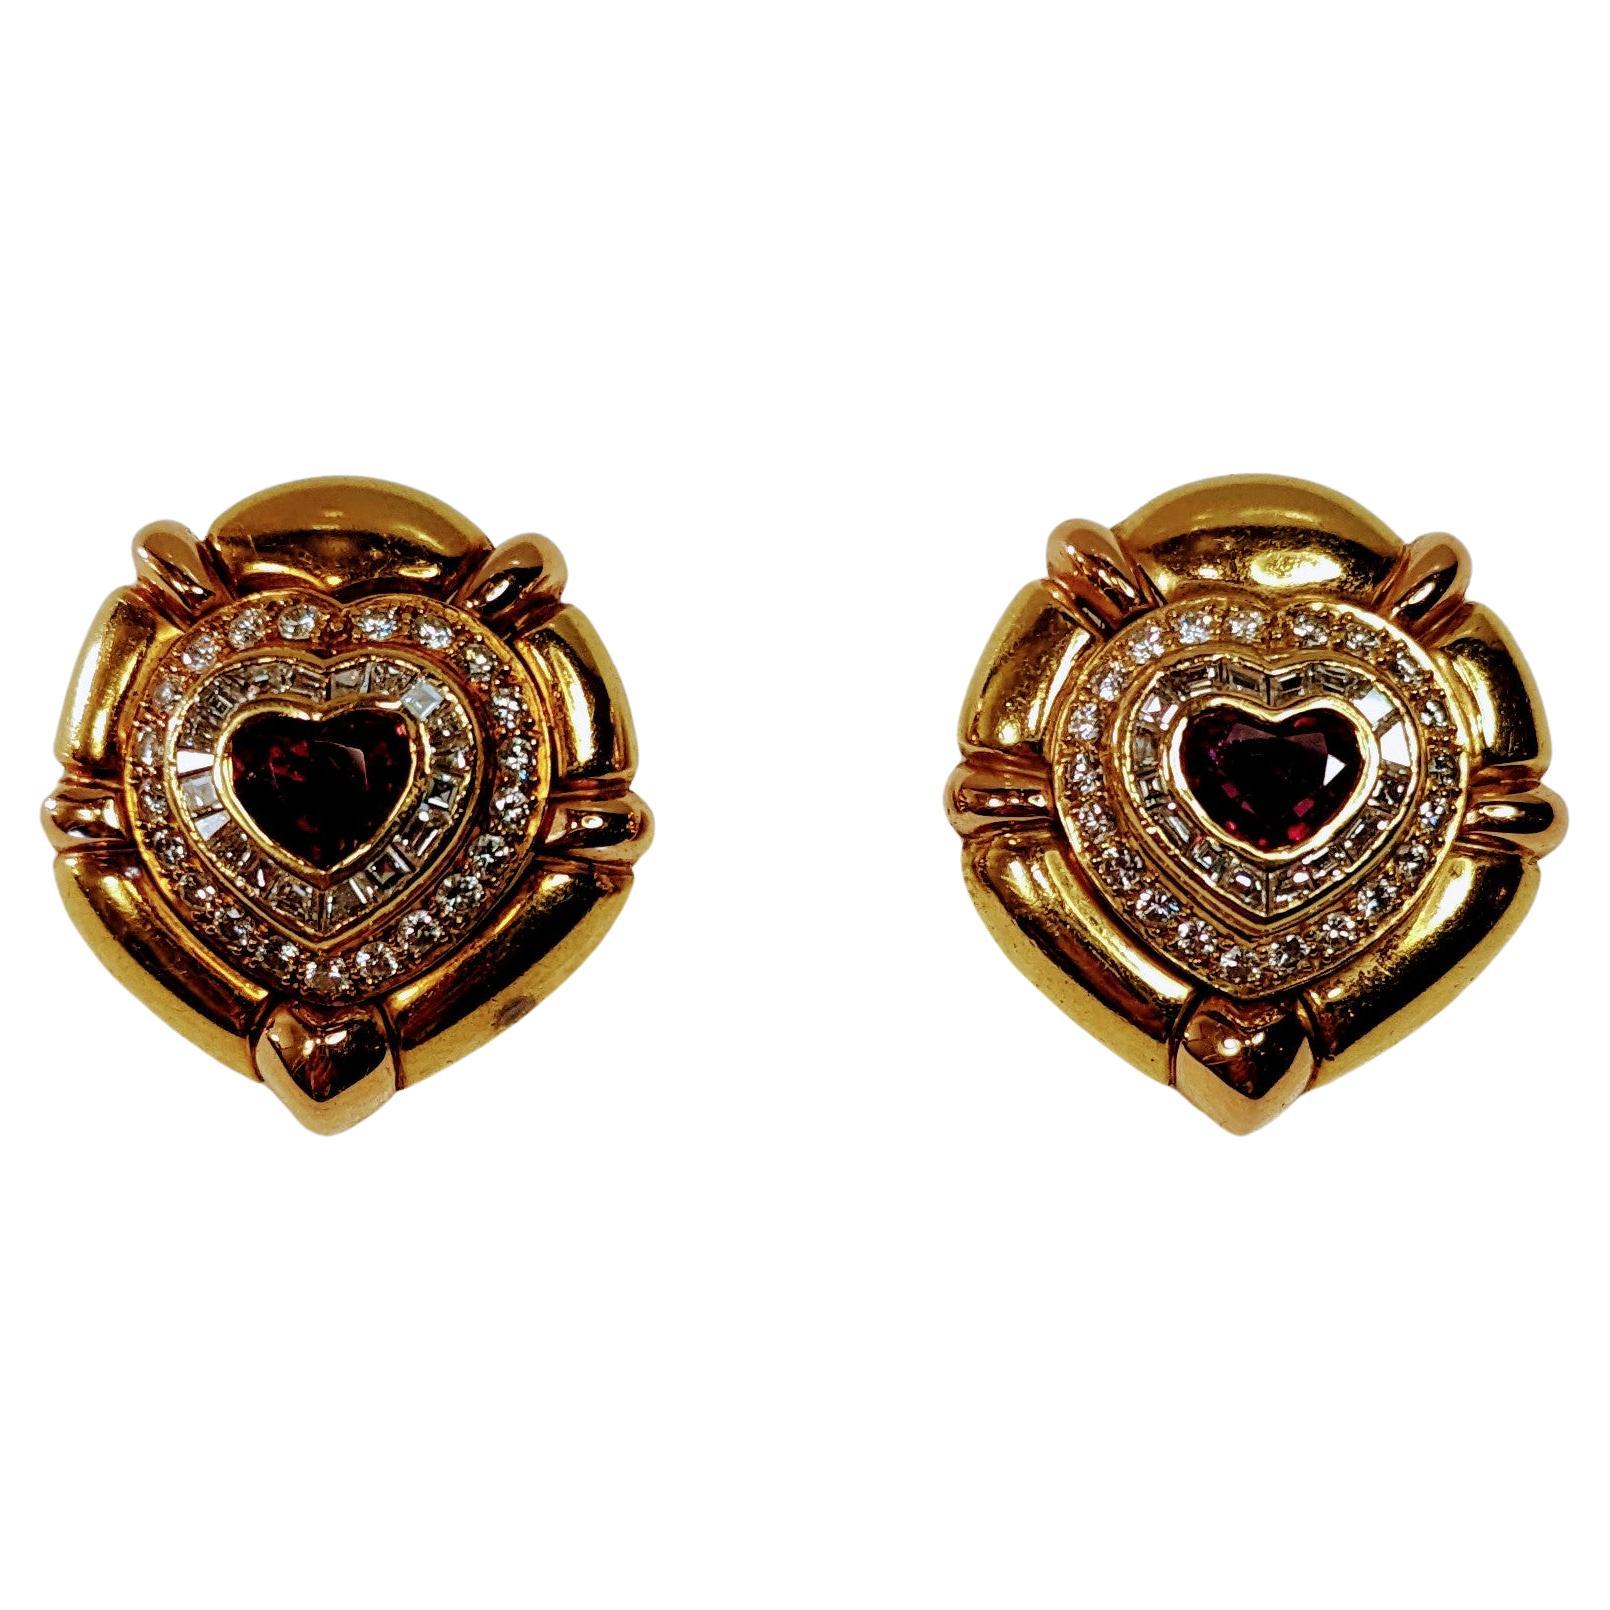 Pradera 18k Gold Bulgary Style Earrings with Diamonds and Burma Heart Ruby For Sale